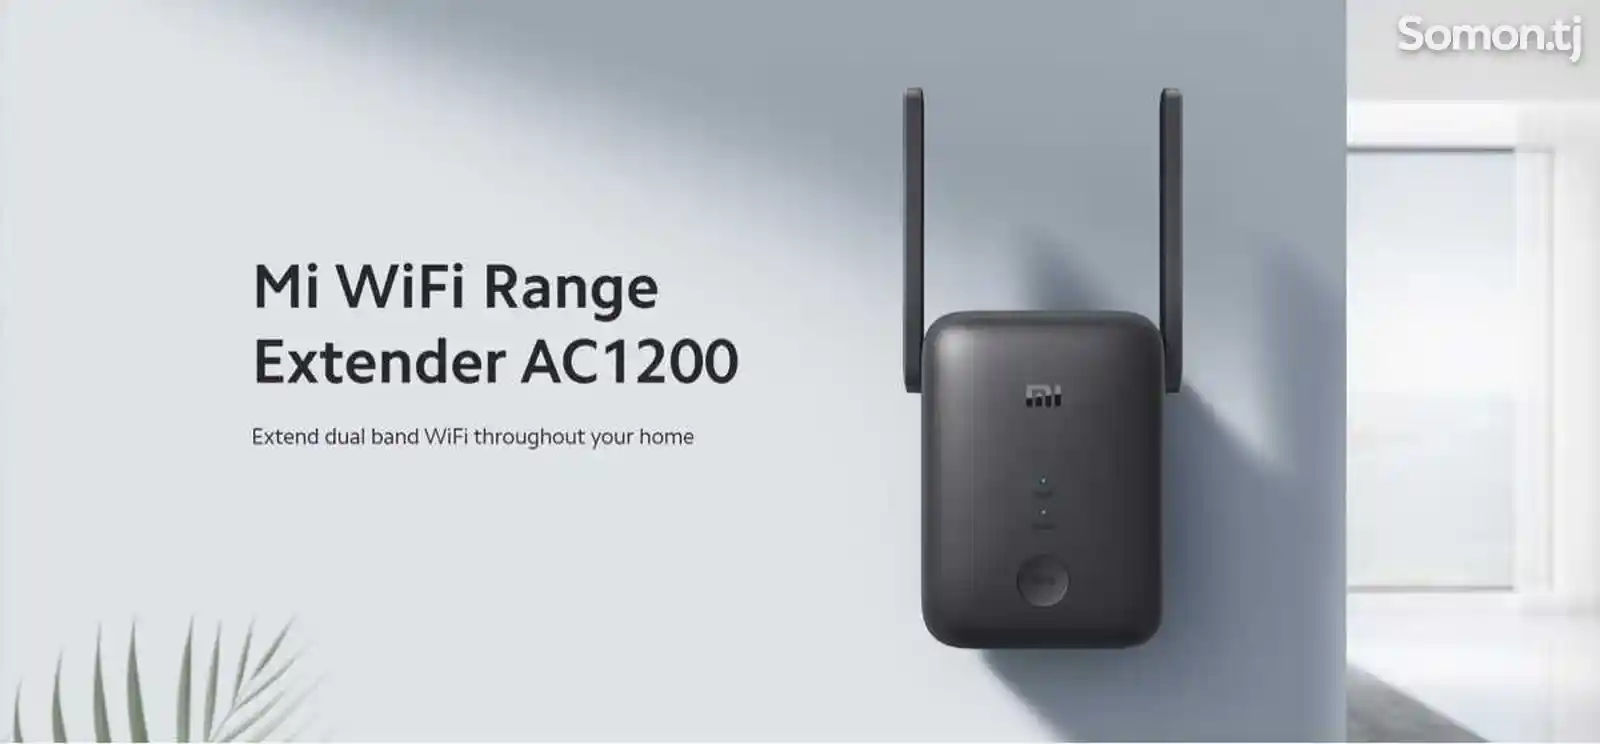 Усилитель Wi-Fi сигнала репитер. Mi WiFi Range Extender AC1200-7